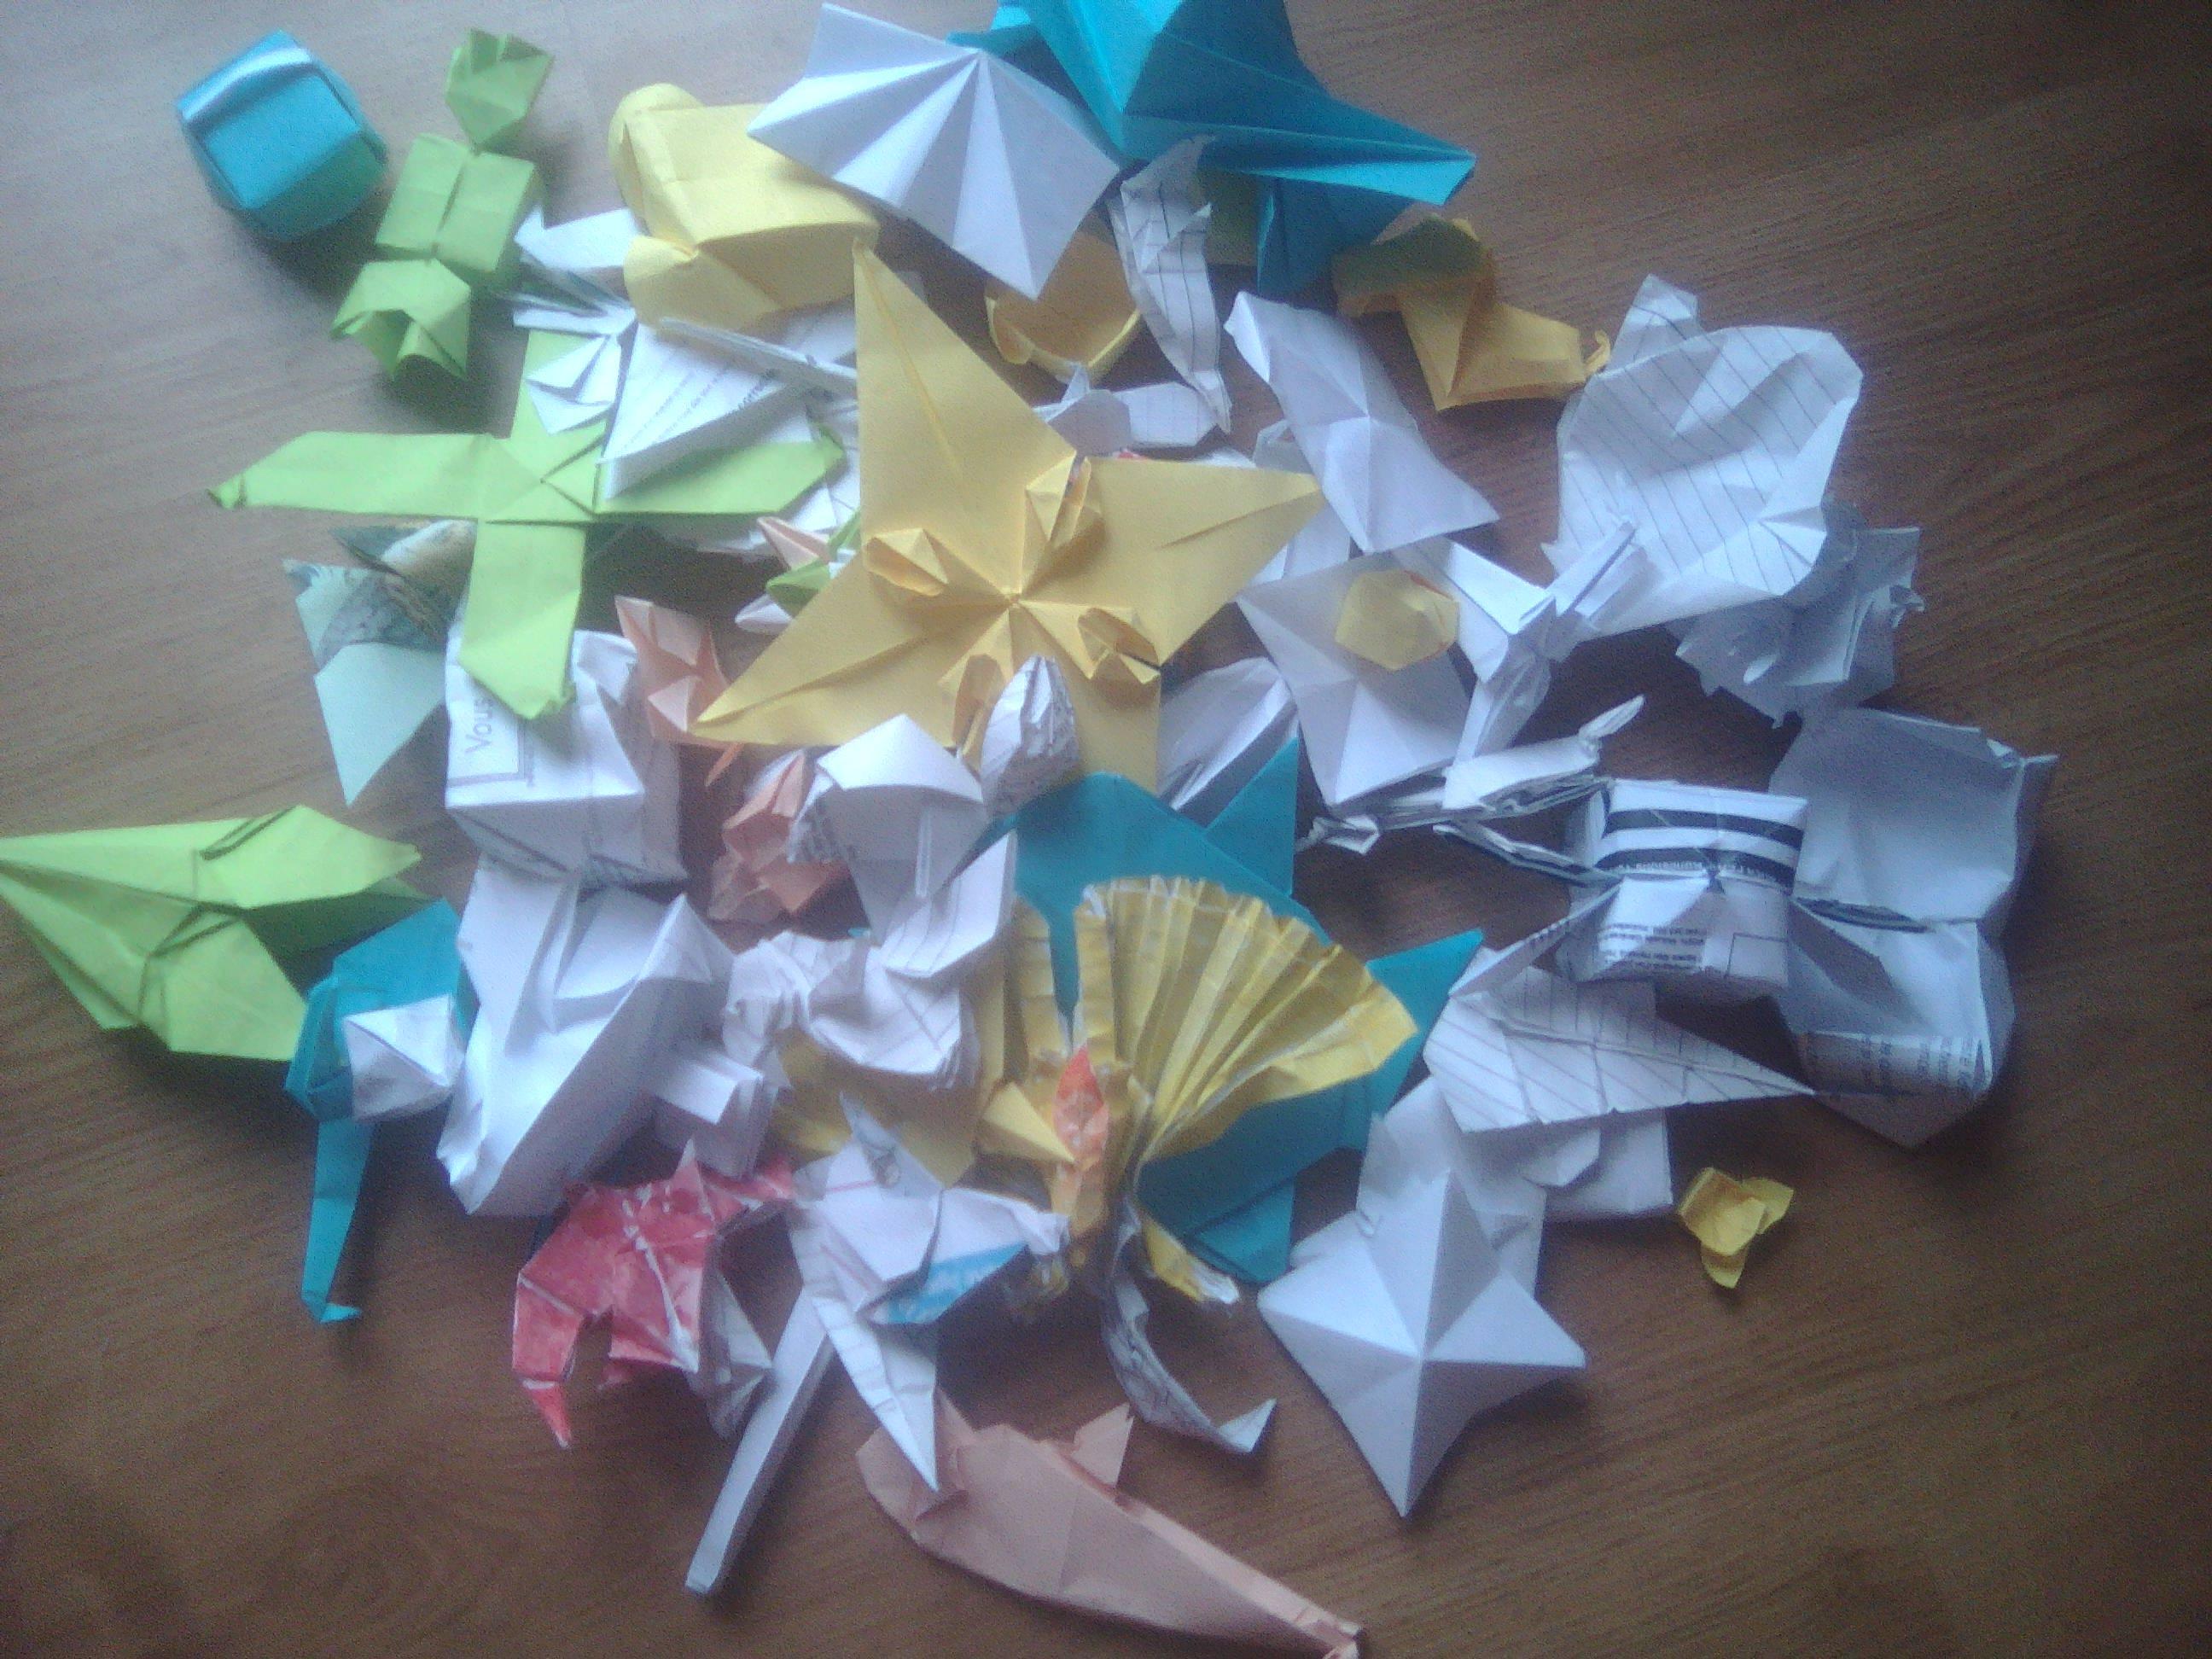 troc de troc origami sur demande image 2